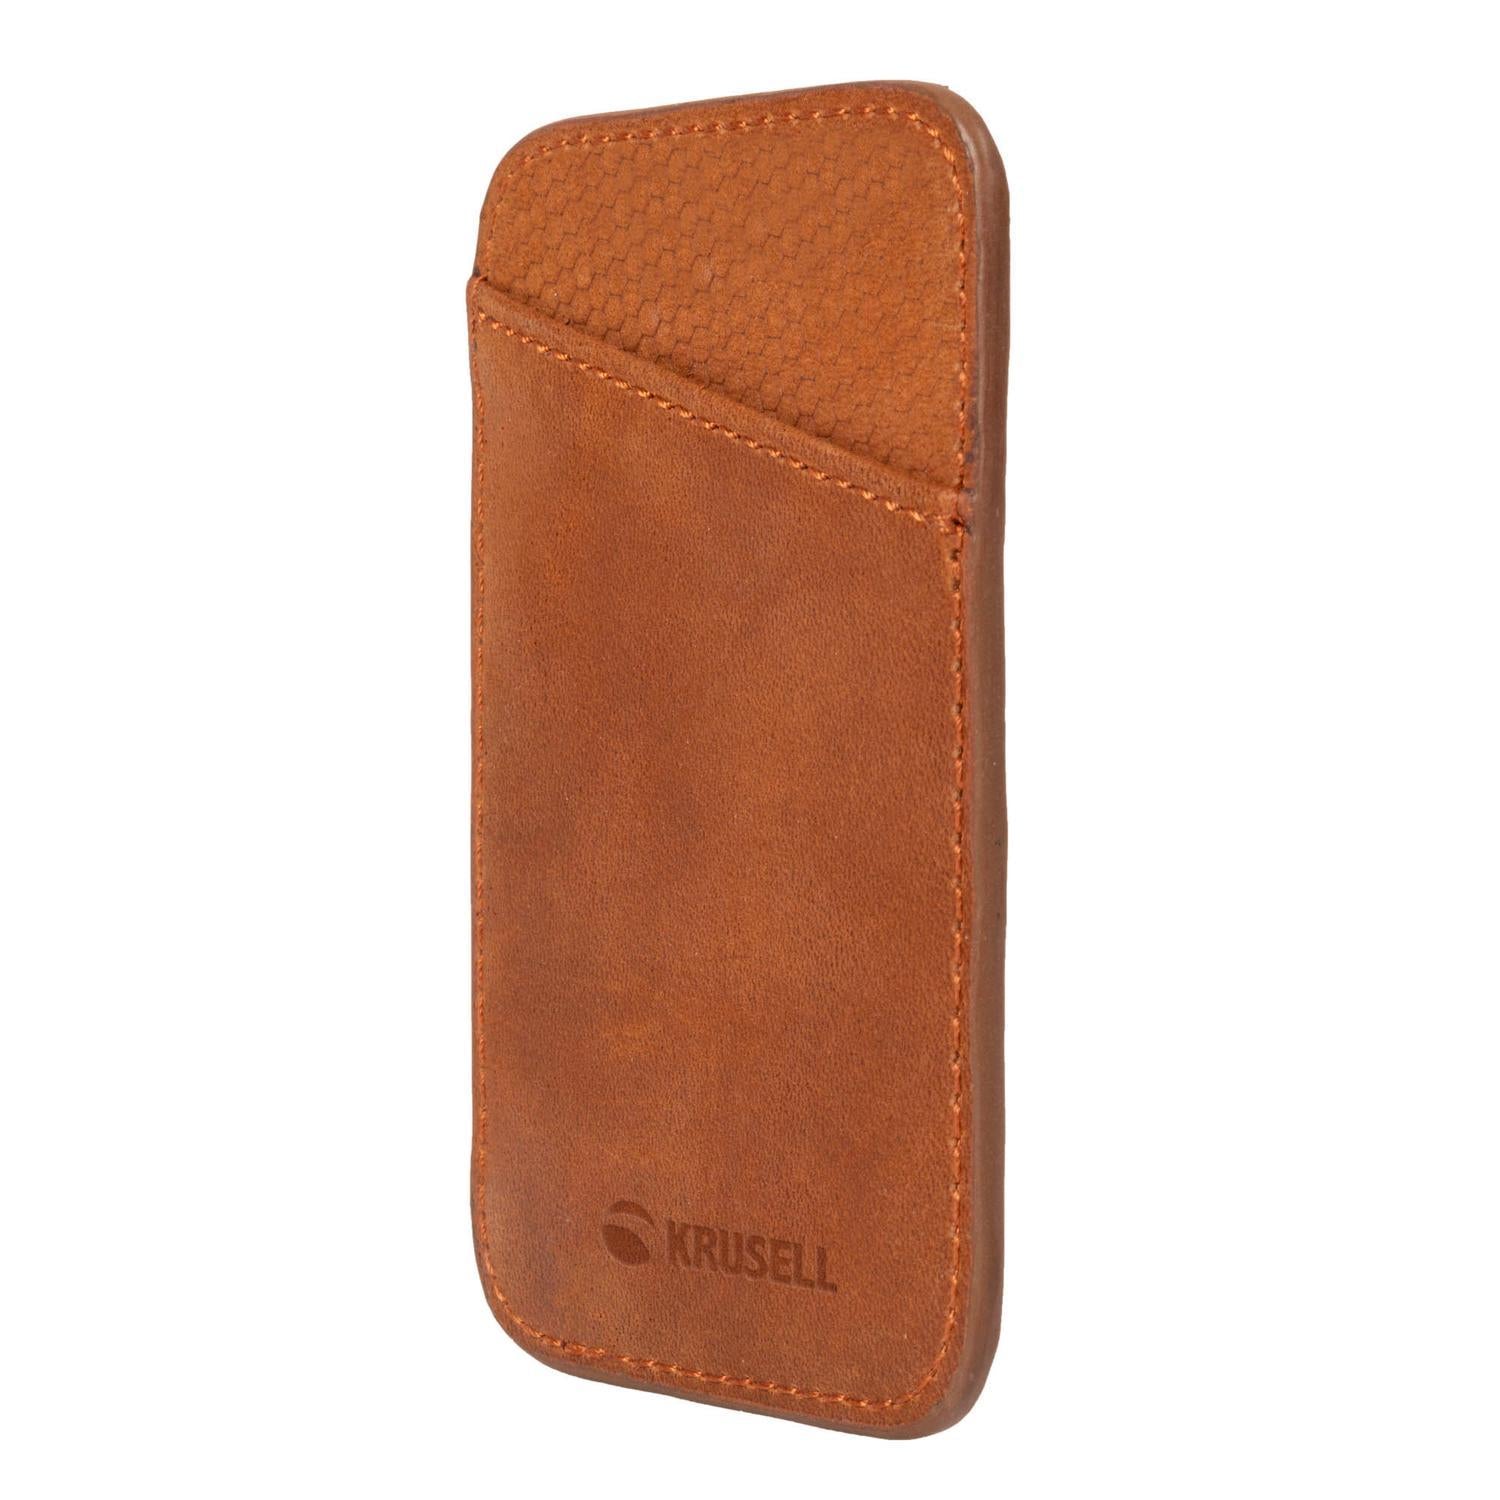 Phone Wallet for iPhone 12 Mini – Krusell International